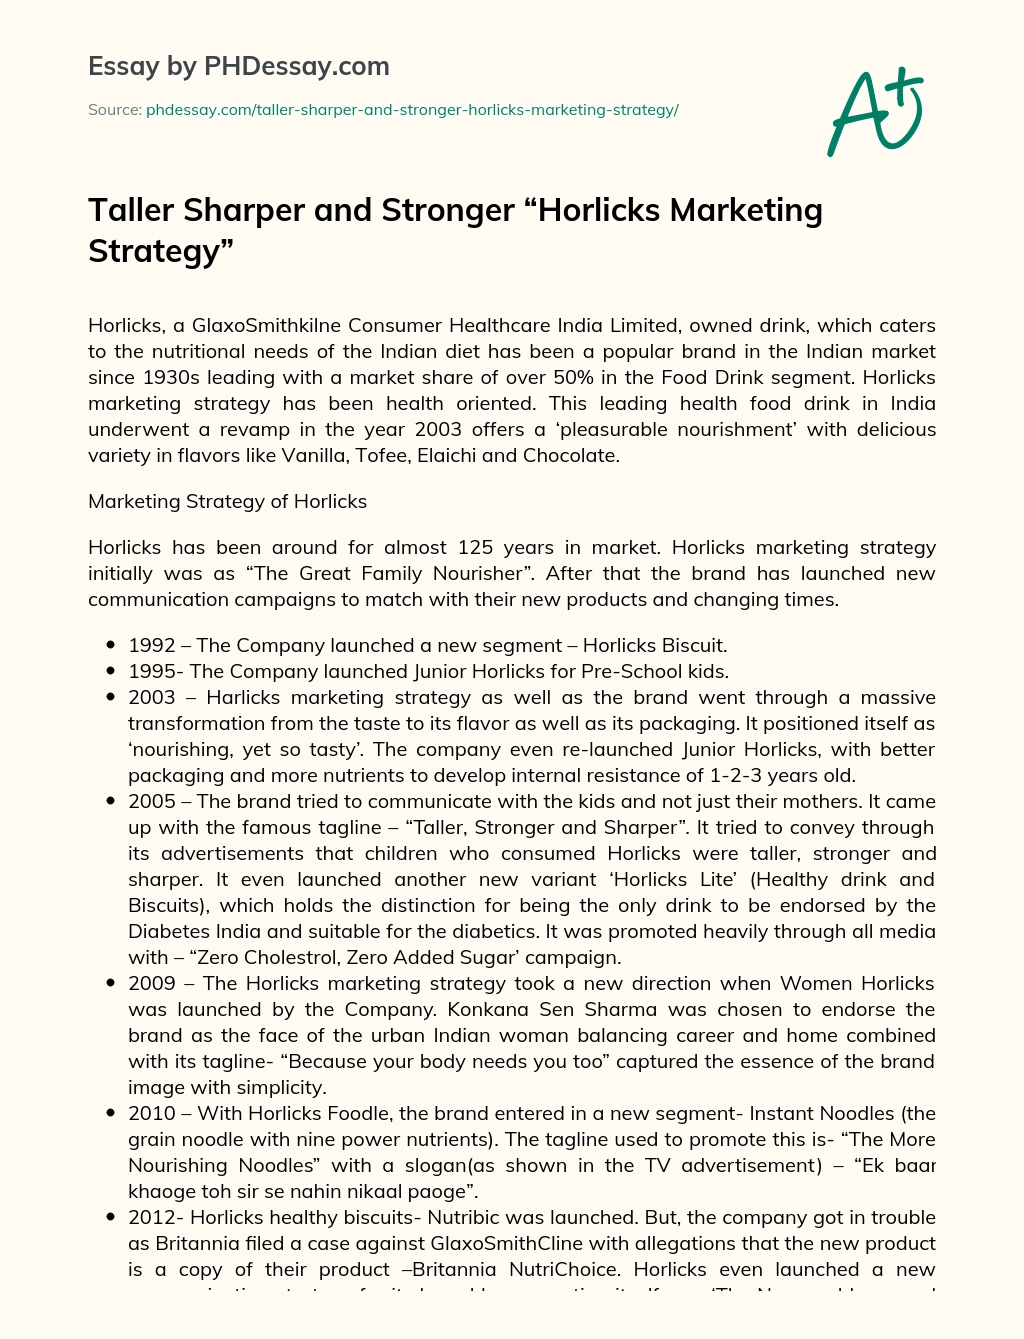 Taller Sharper and Stronger “Horlicks Marketing Strategy” essay